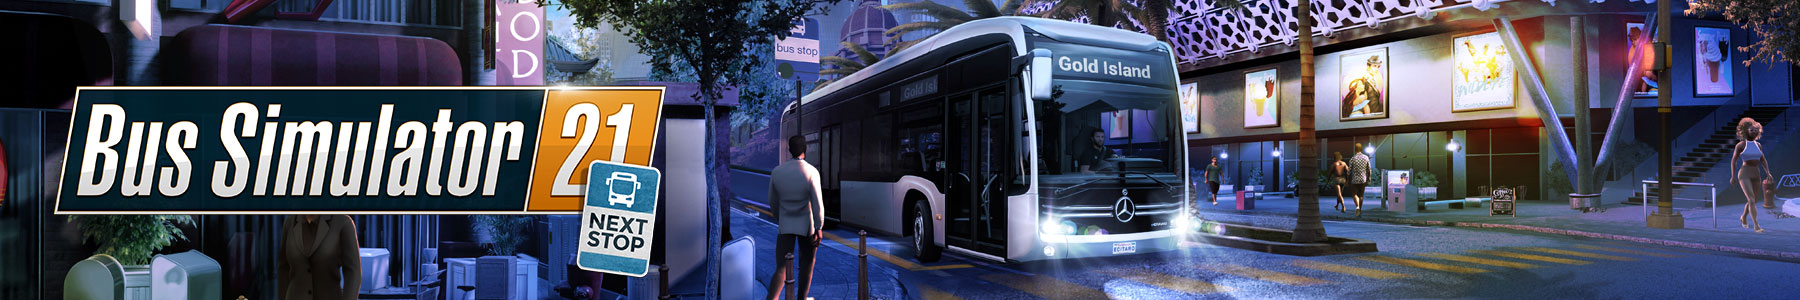 bus simulator 21 ed